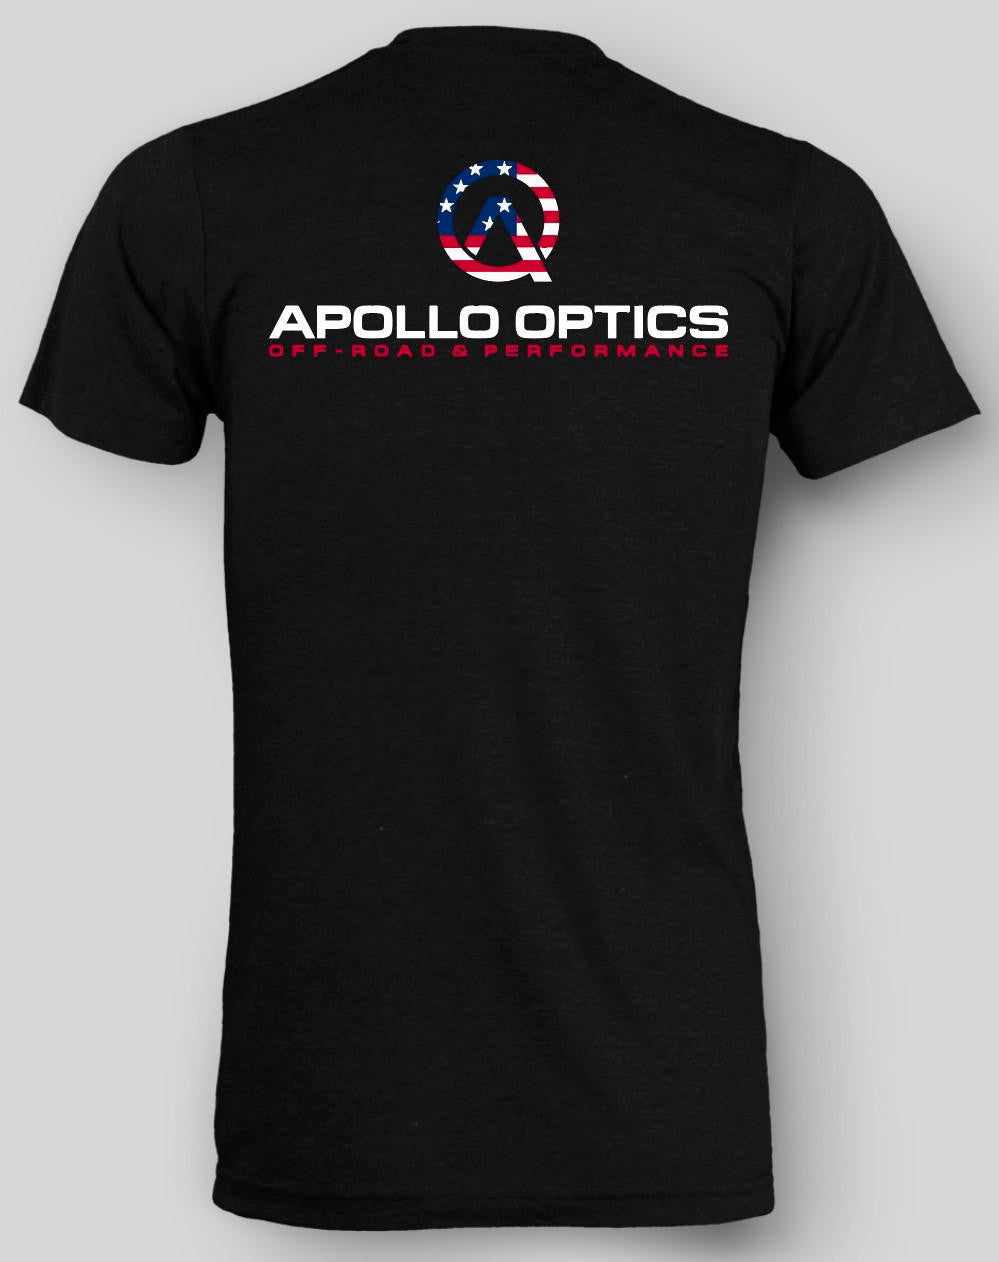  Apollo Optics AMERICANA Tee 